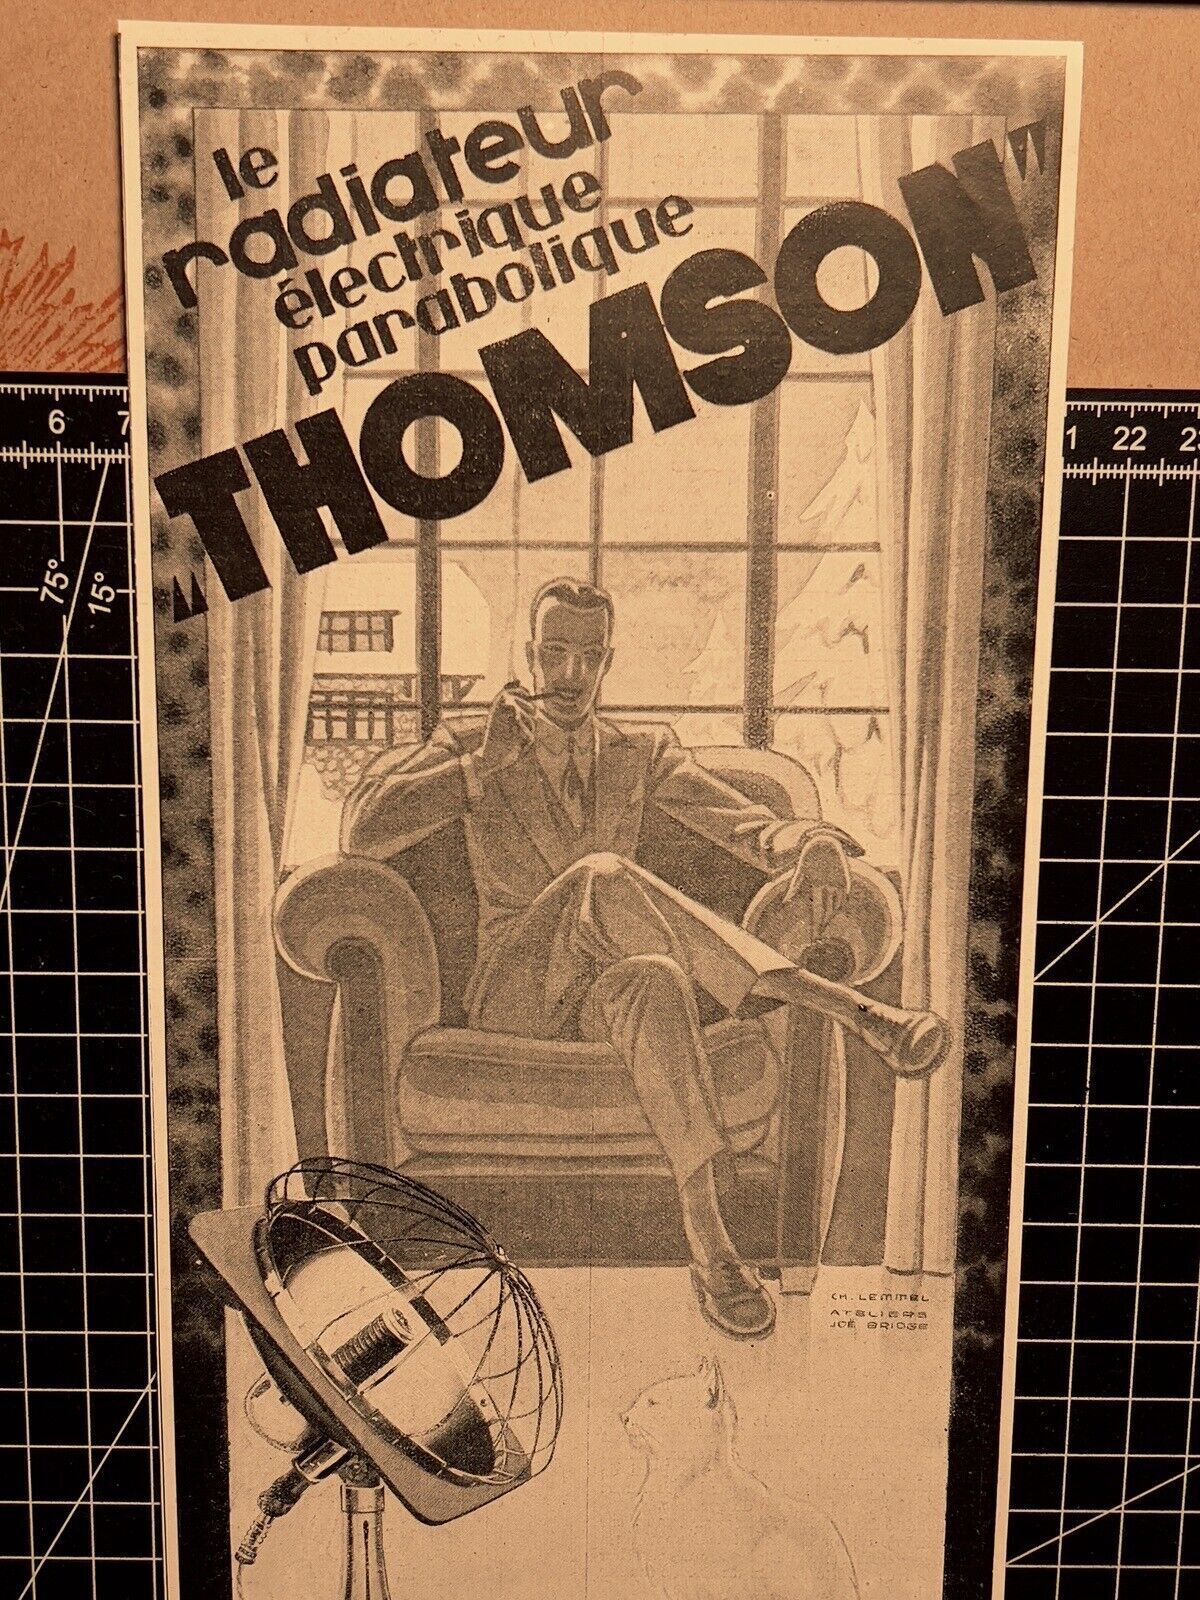 THOMSON HEATING ADVERTISING VINTAGE FRANCE 1925 ORIGINAL ADVERTISEMENT POSTER